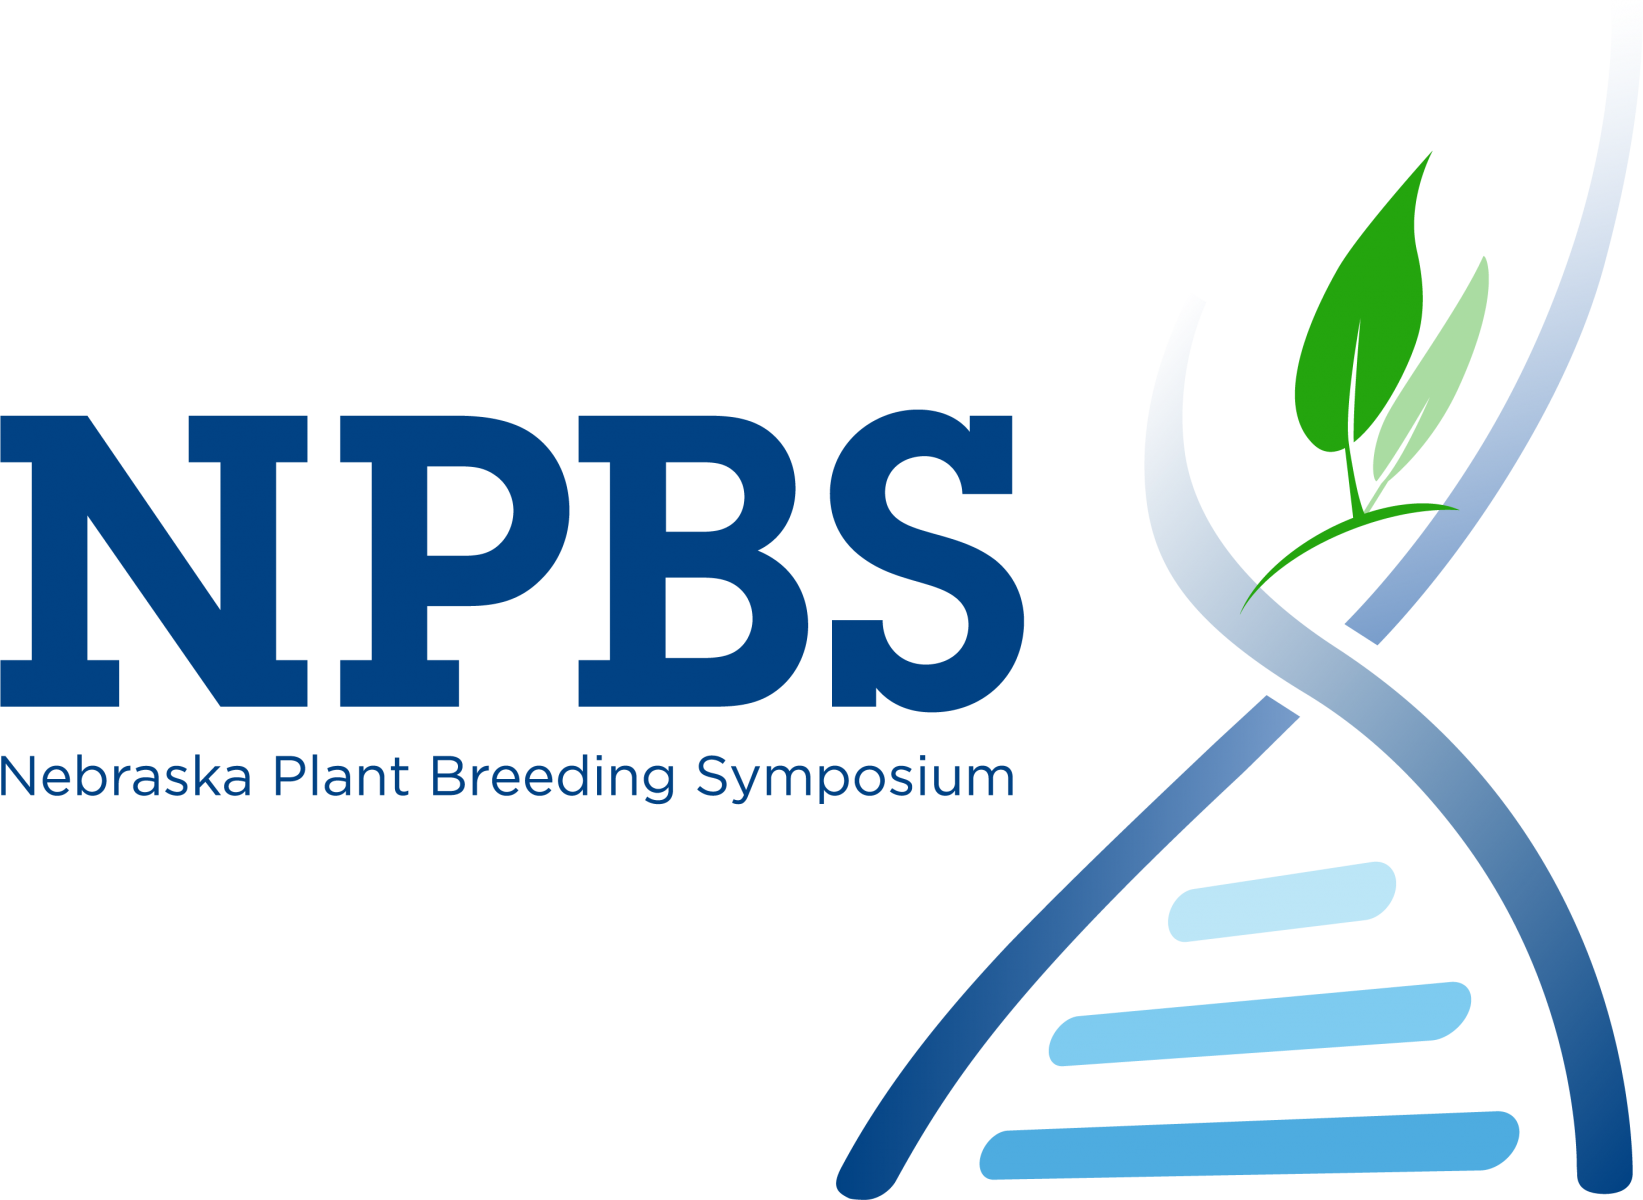 NPBS logo